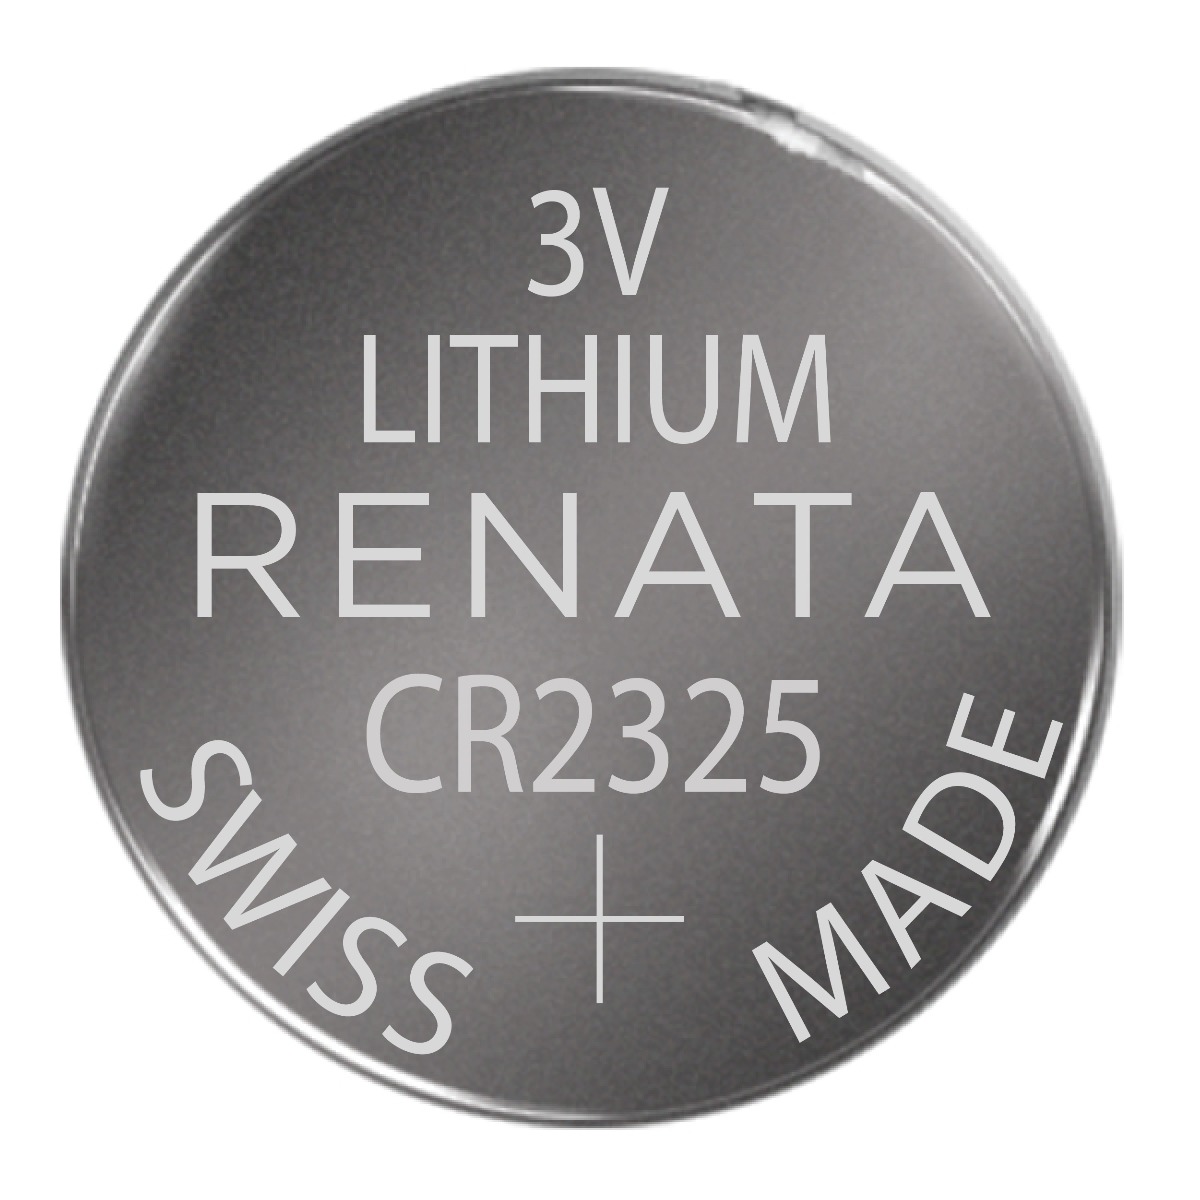 Varta CR2032 Button Battery 5 Units Silver